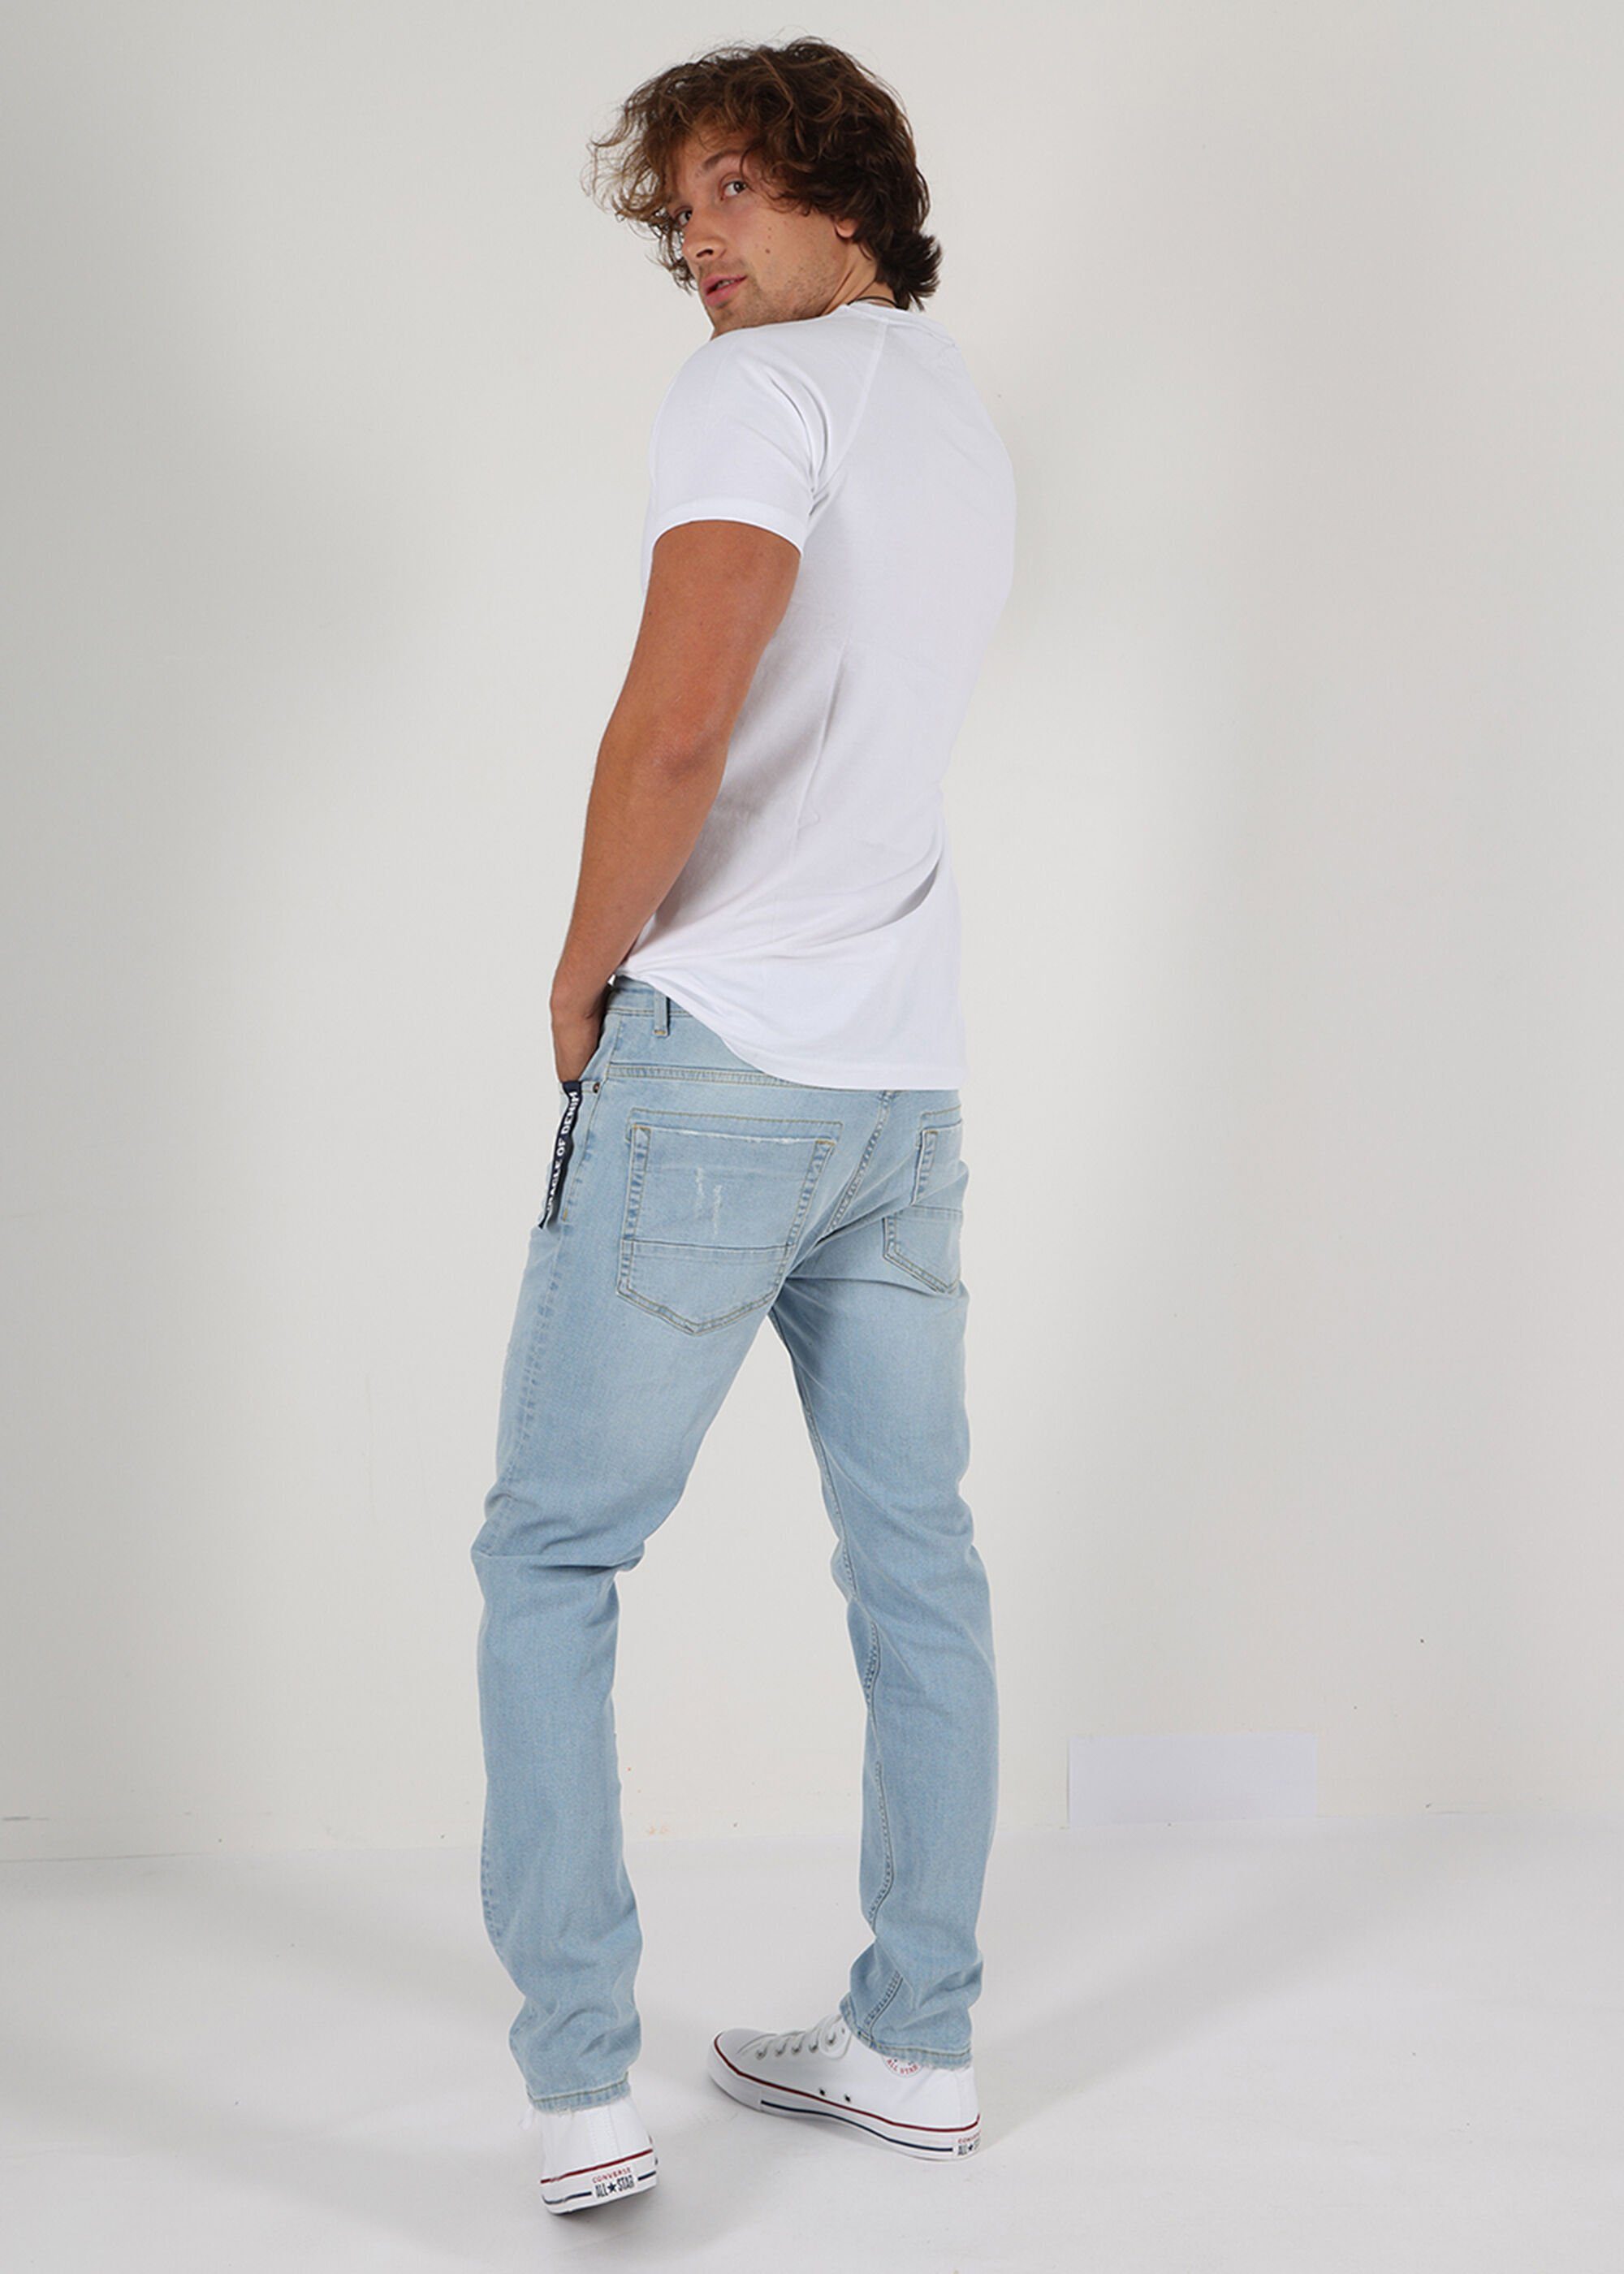 Fit of Denimqualität Marcel Hochwertige Denim 5-Pocket-Jeans Slim Miracle